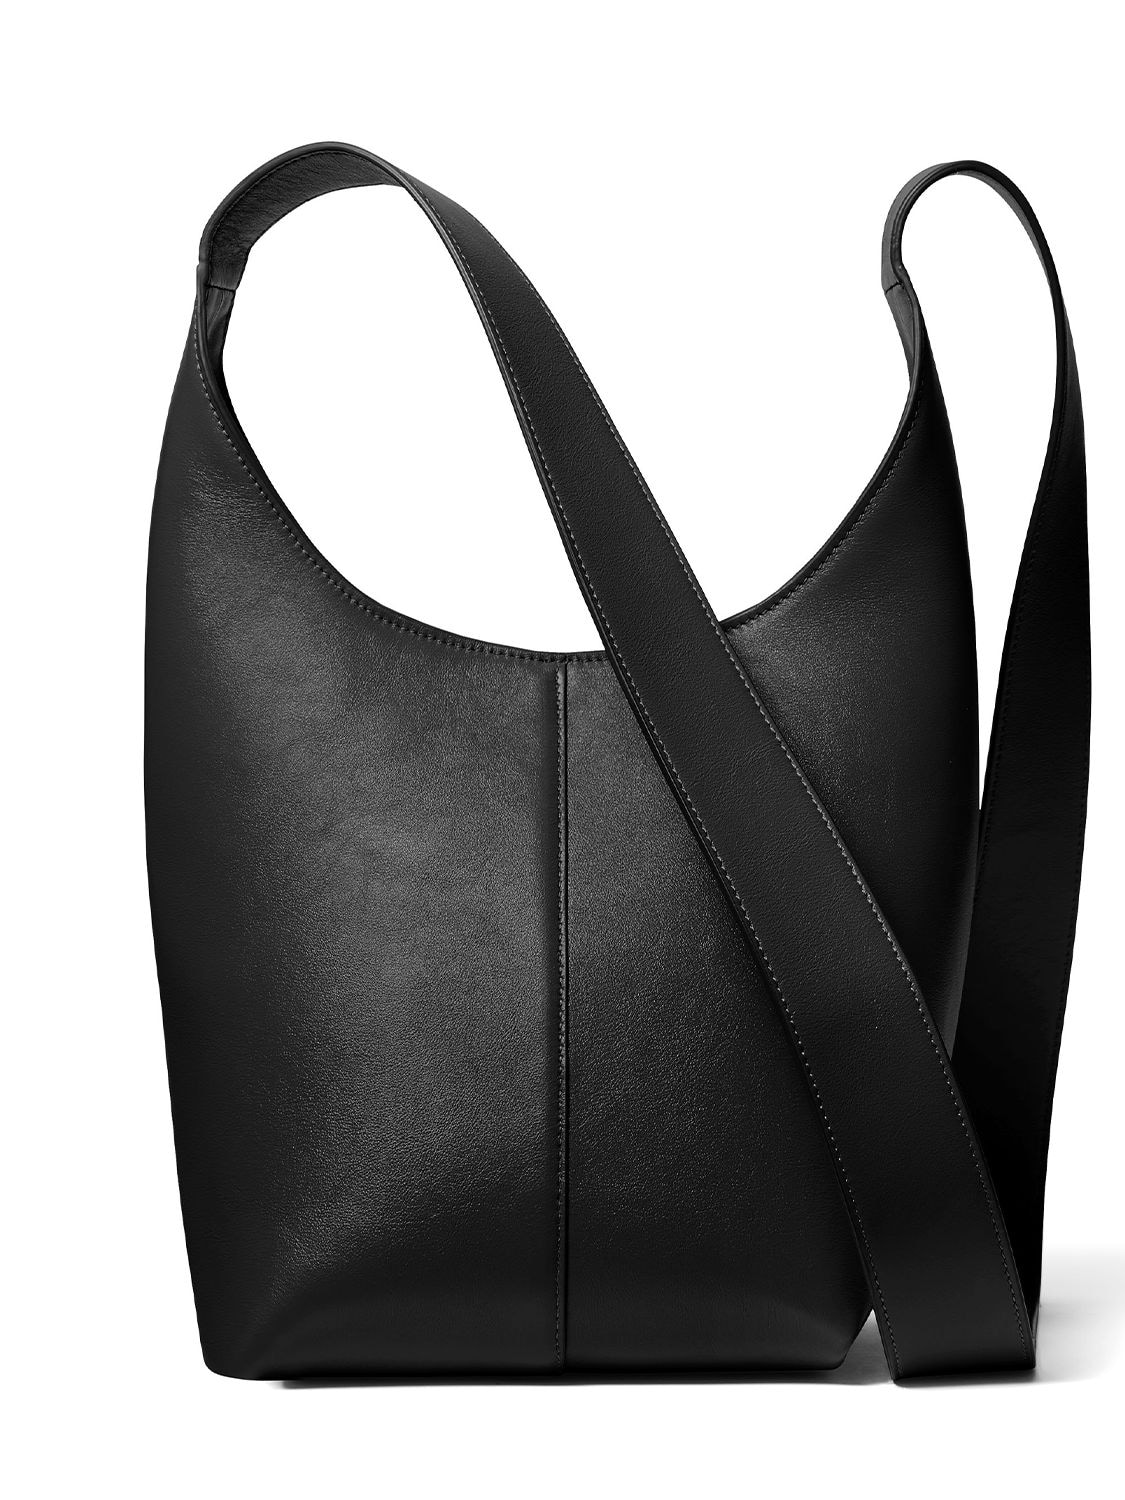 Michael Kors Mini Dede Leather Hobo Bag In Black